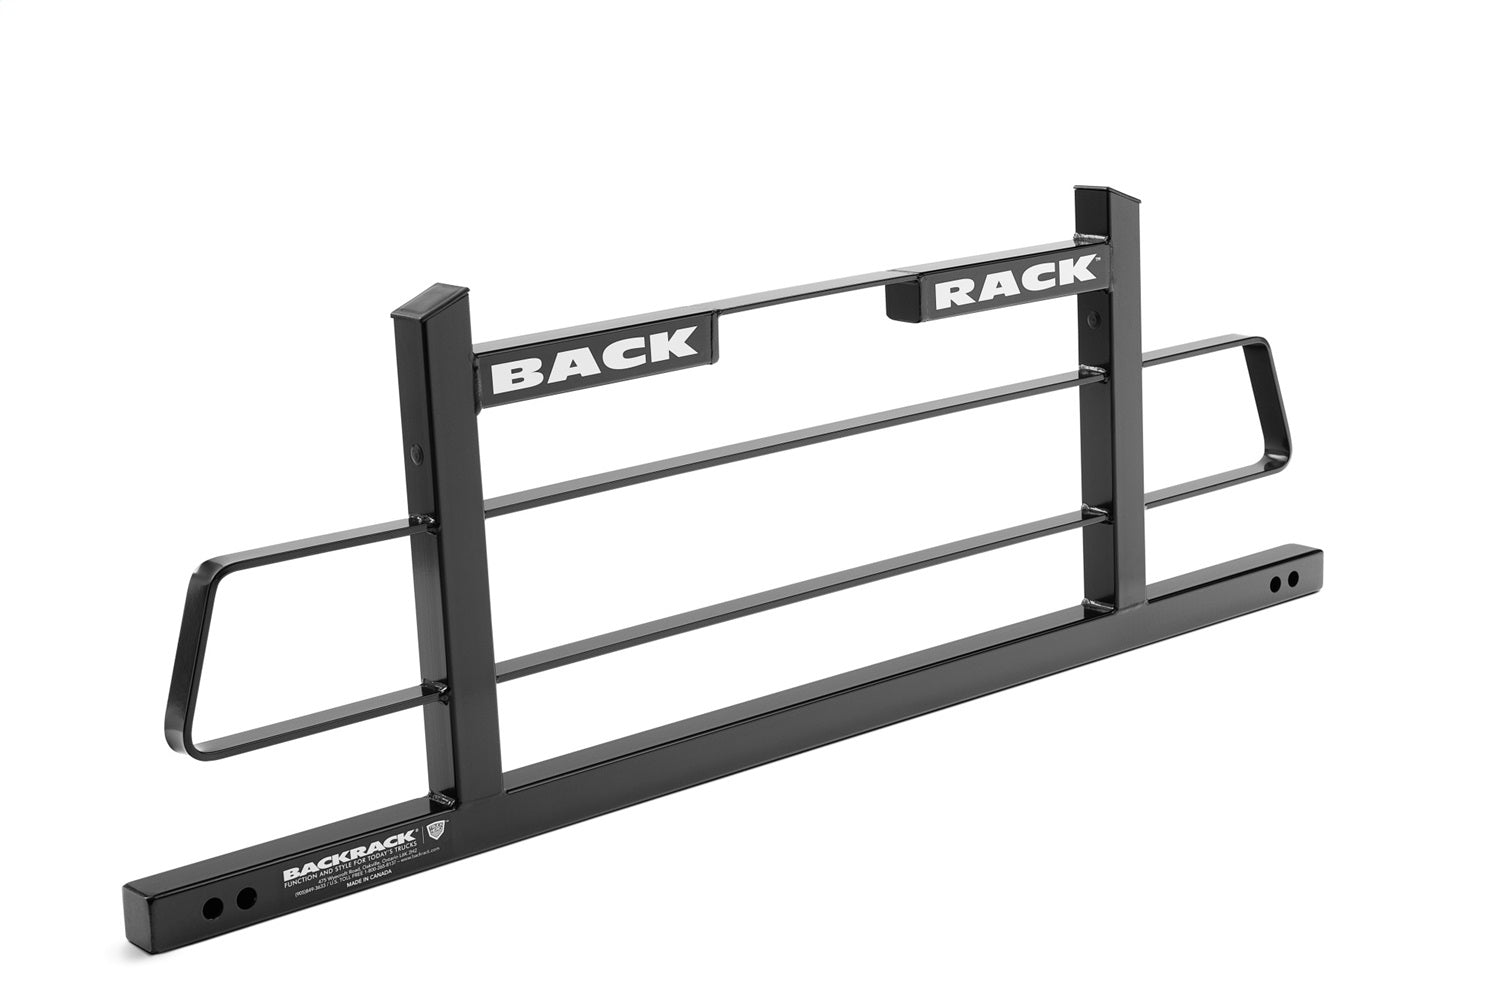 Backrack 15022 Backrack Headache Rack Frame